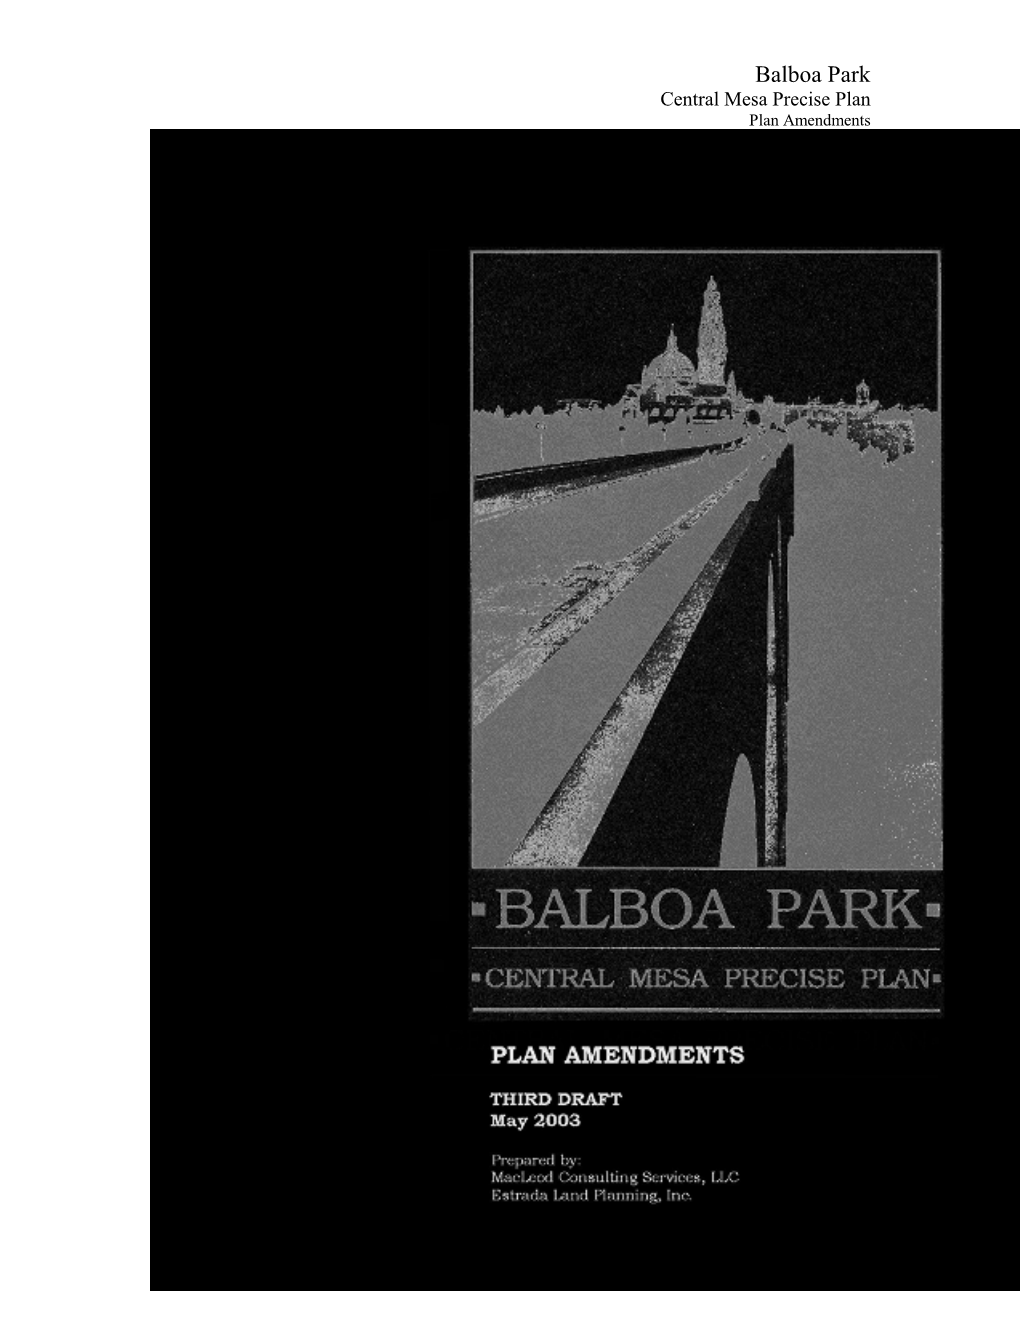 Balboa Park Central Mesa Precise Plan Amendment